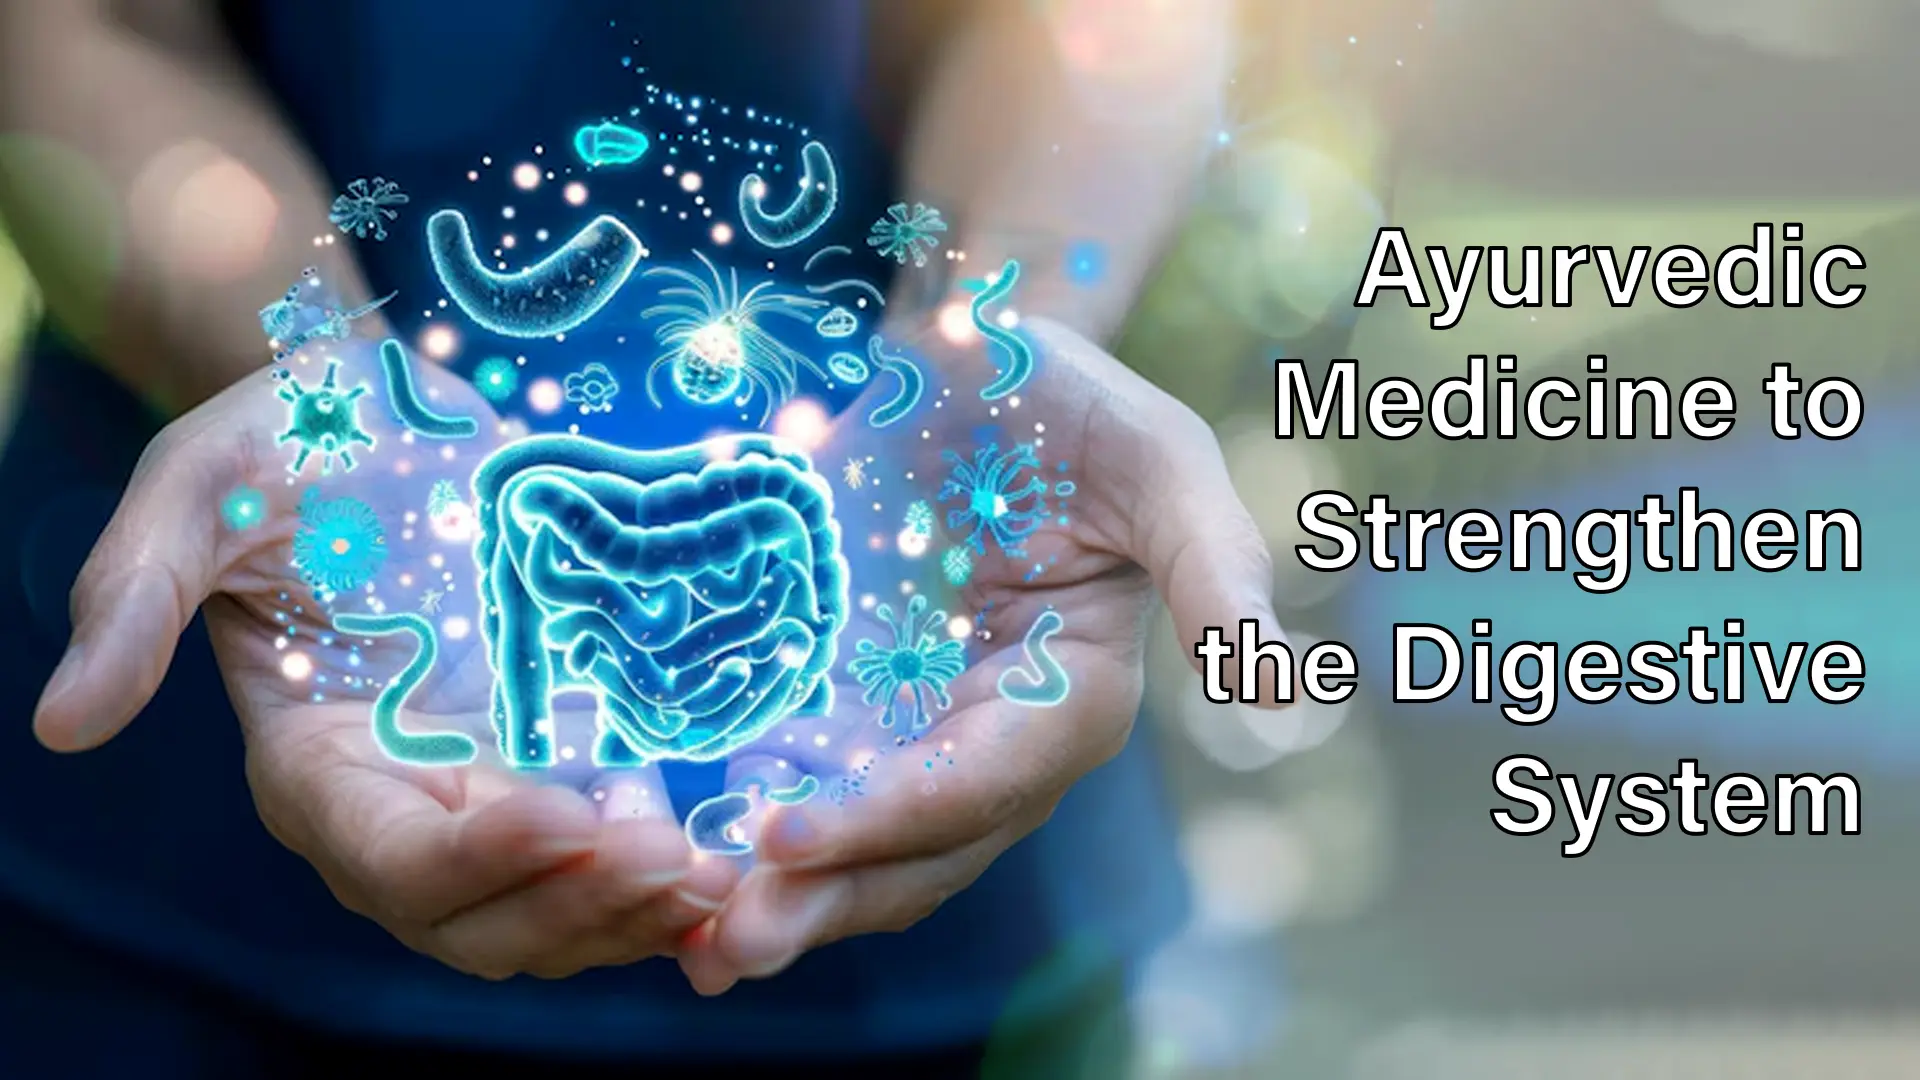 Ayurvedic Medicine to Strengthen the Digestive System